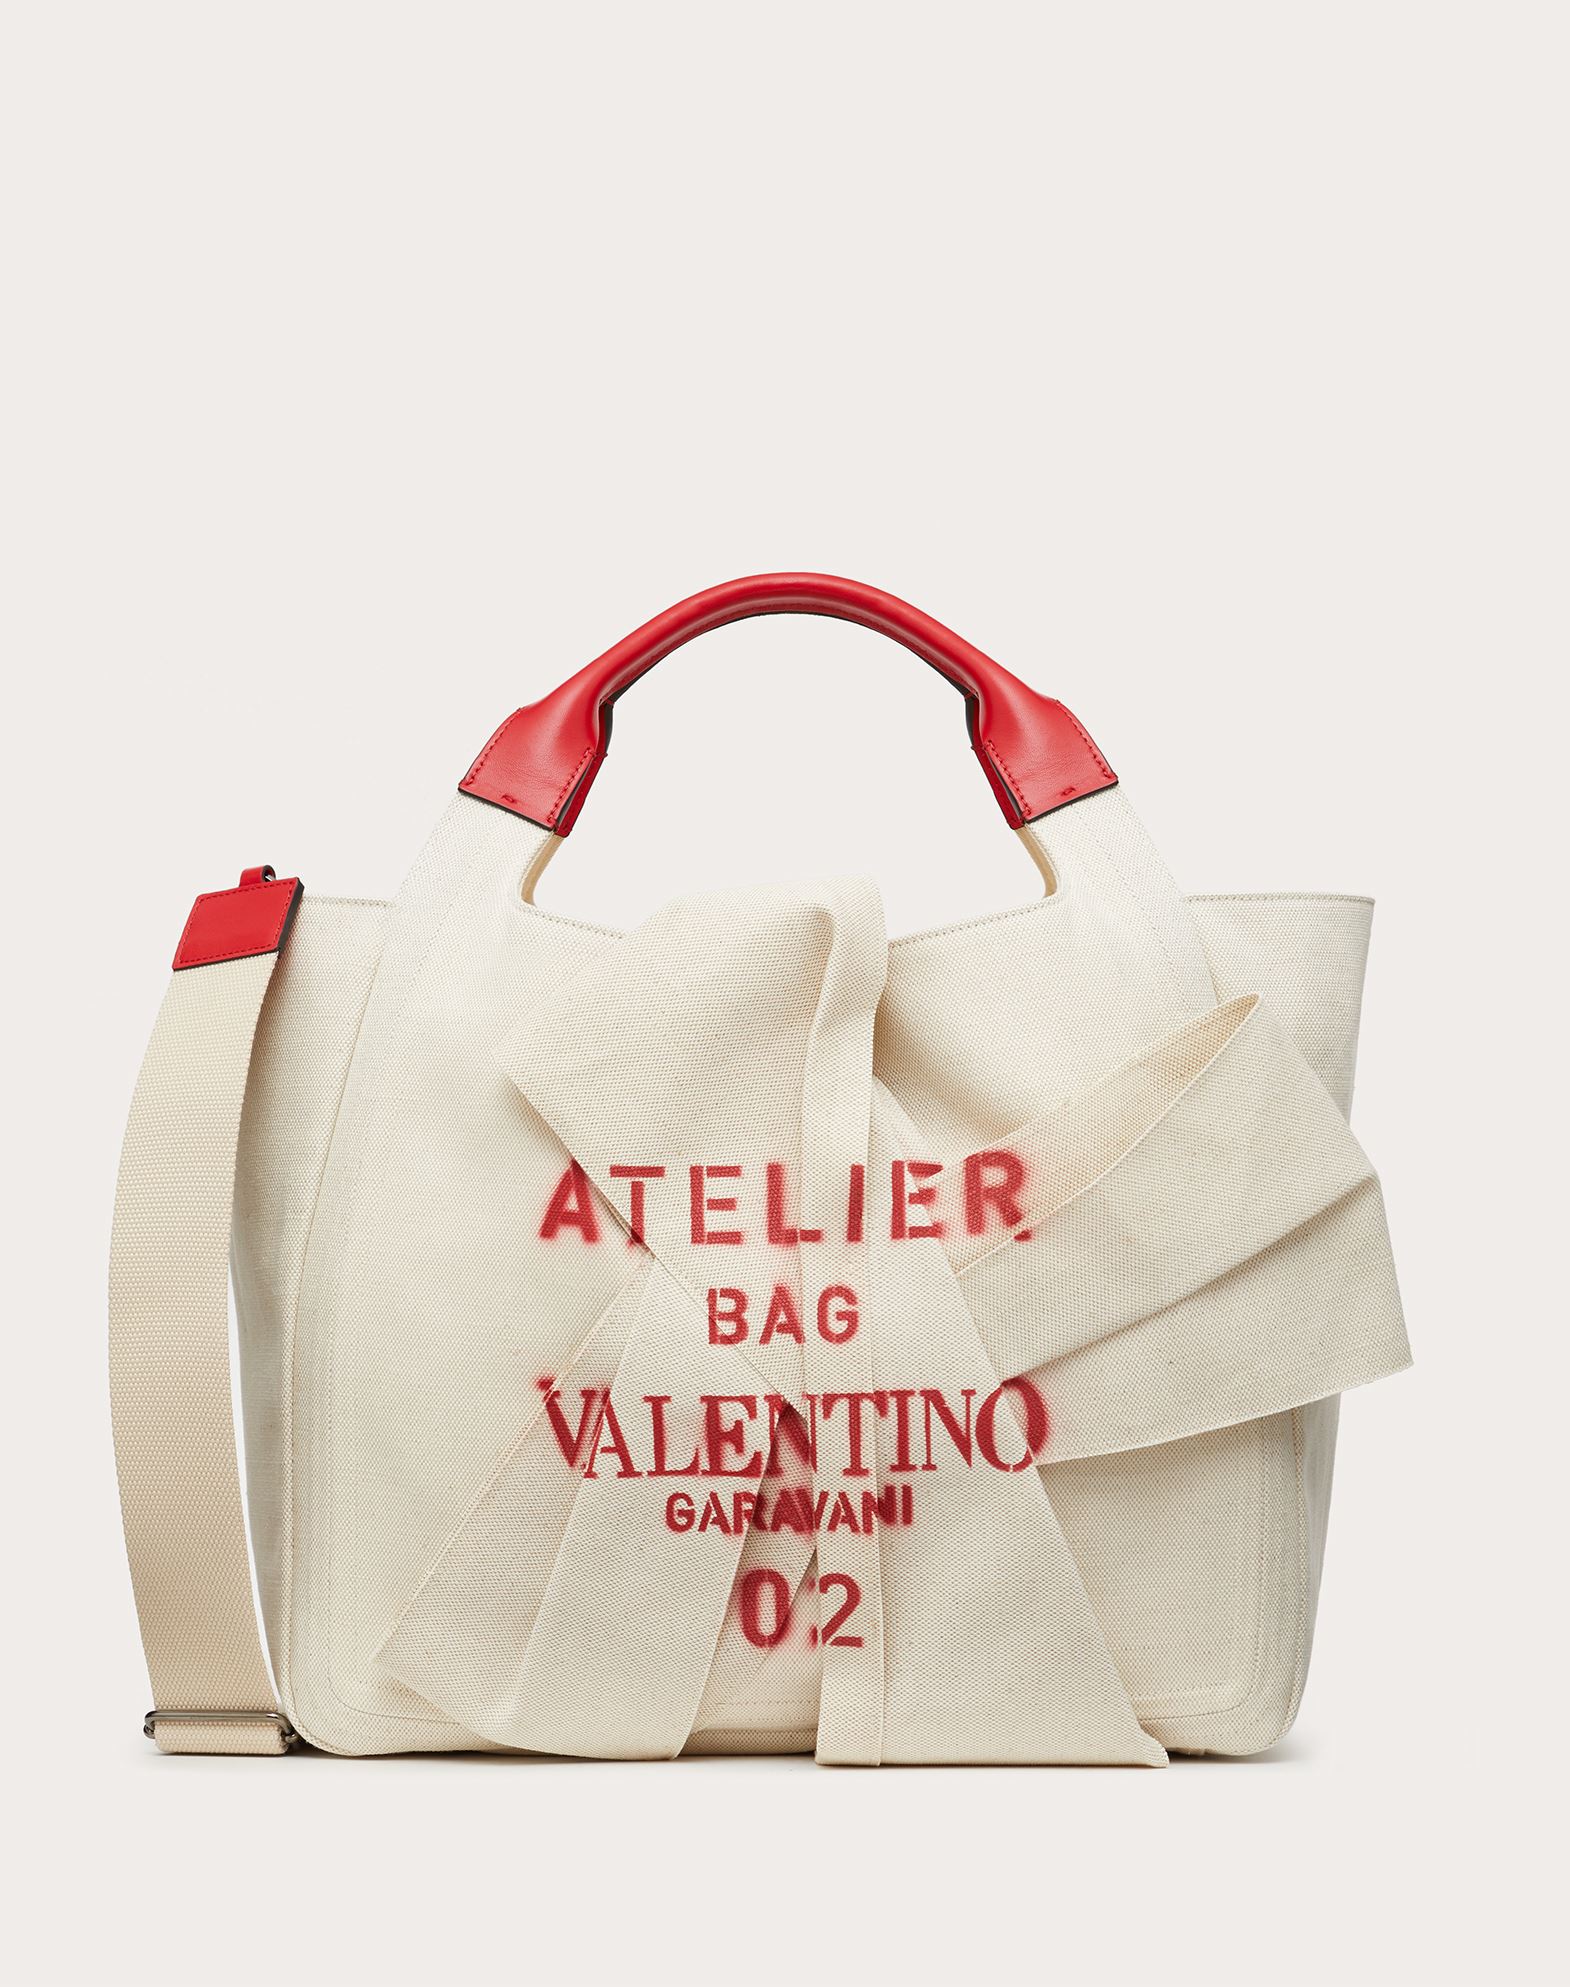 Valentino Garavani Large 02 Bow Edition Atelier Canvas Tote Bag In ...